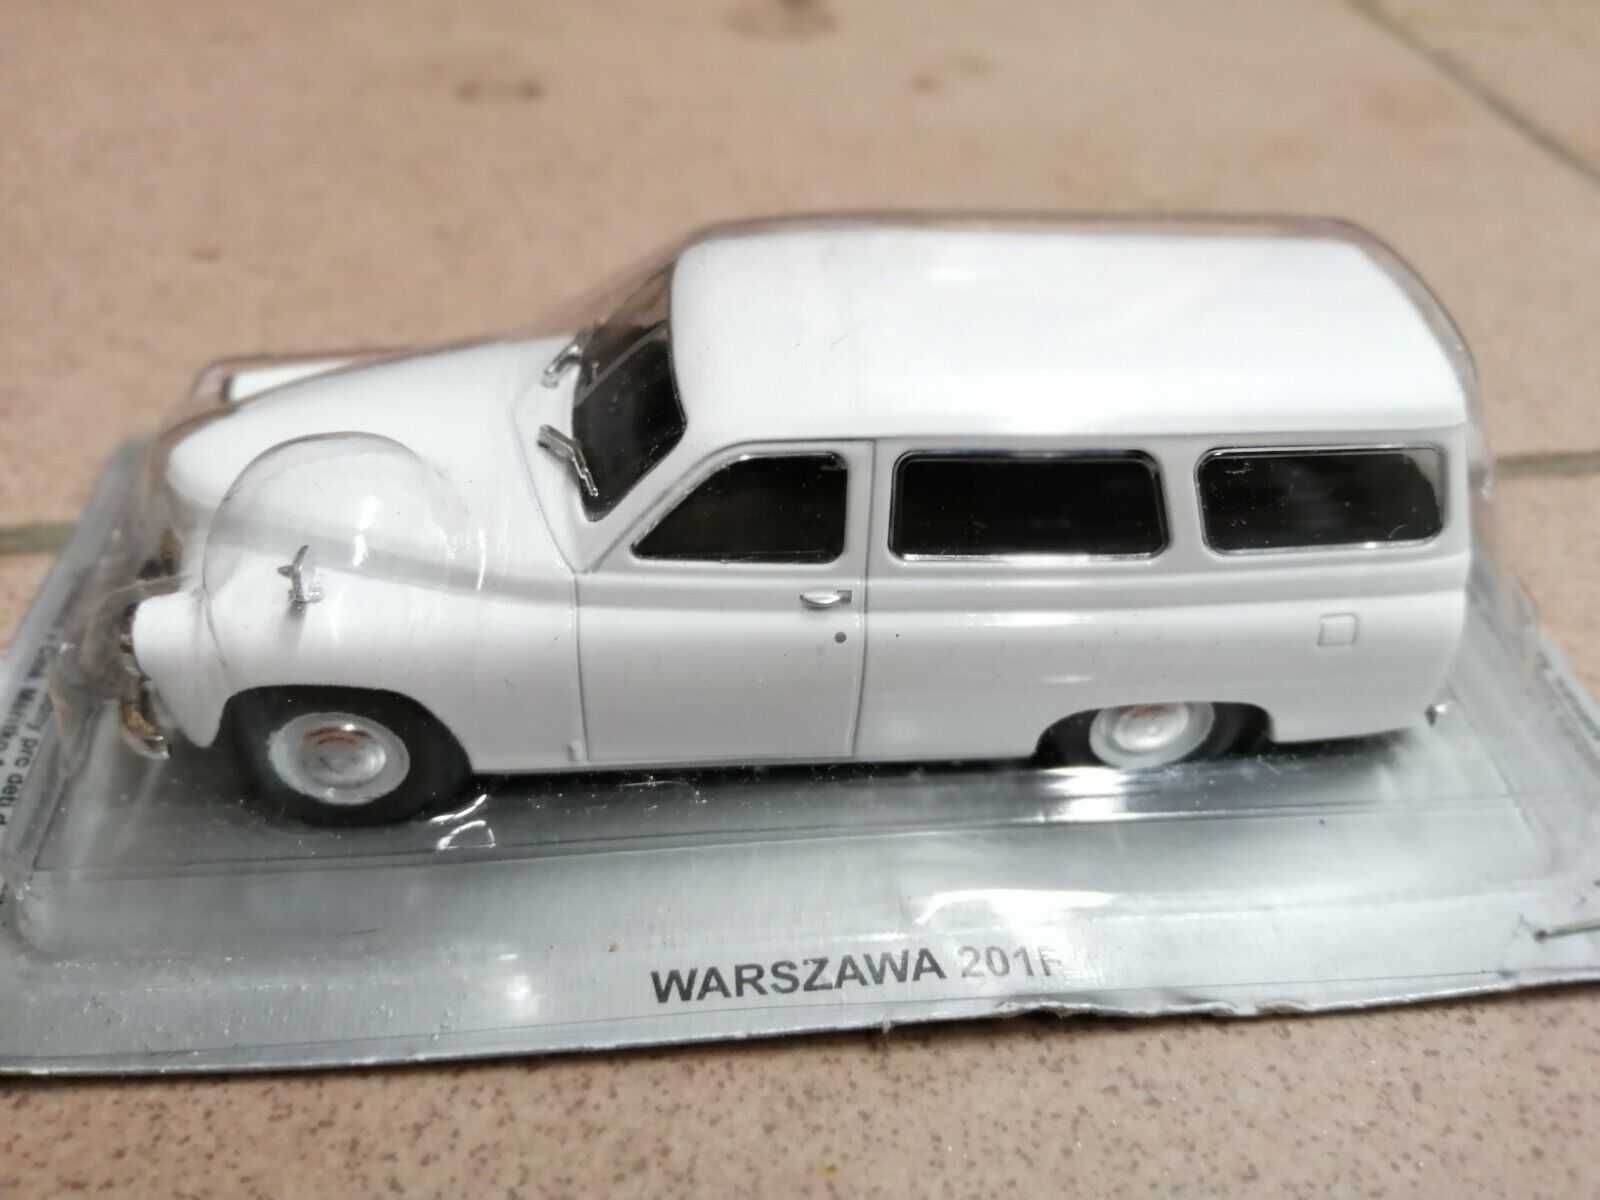 Macheta WARSZAWA 201F 1951 - DeAgostini Polonia, scara 1/43.